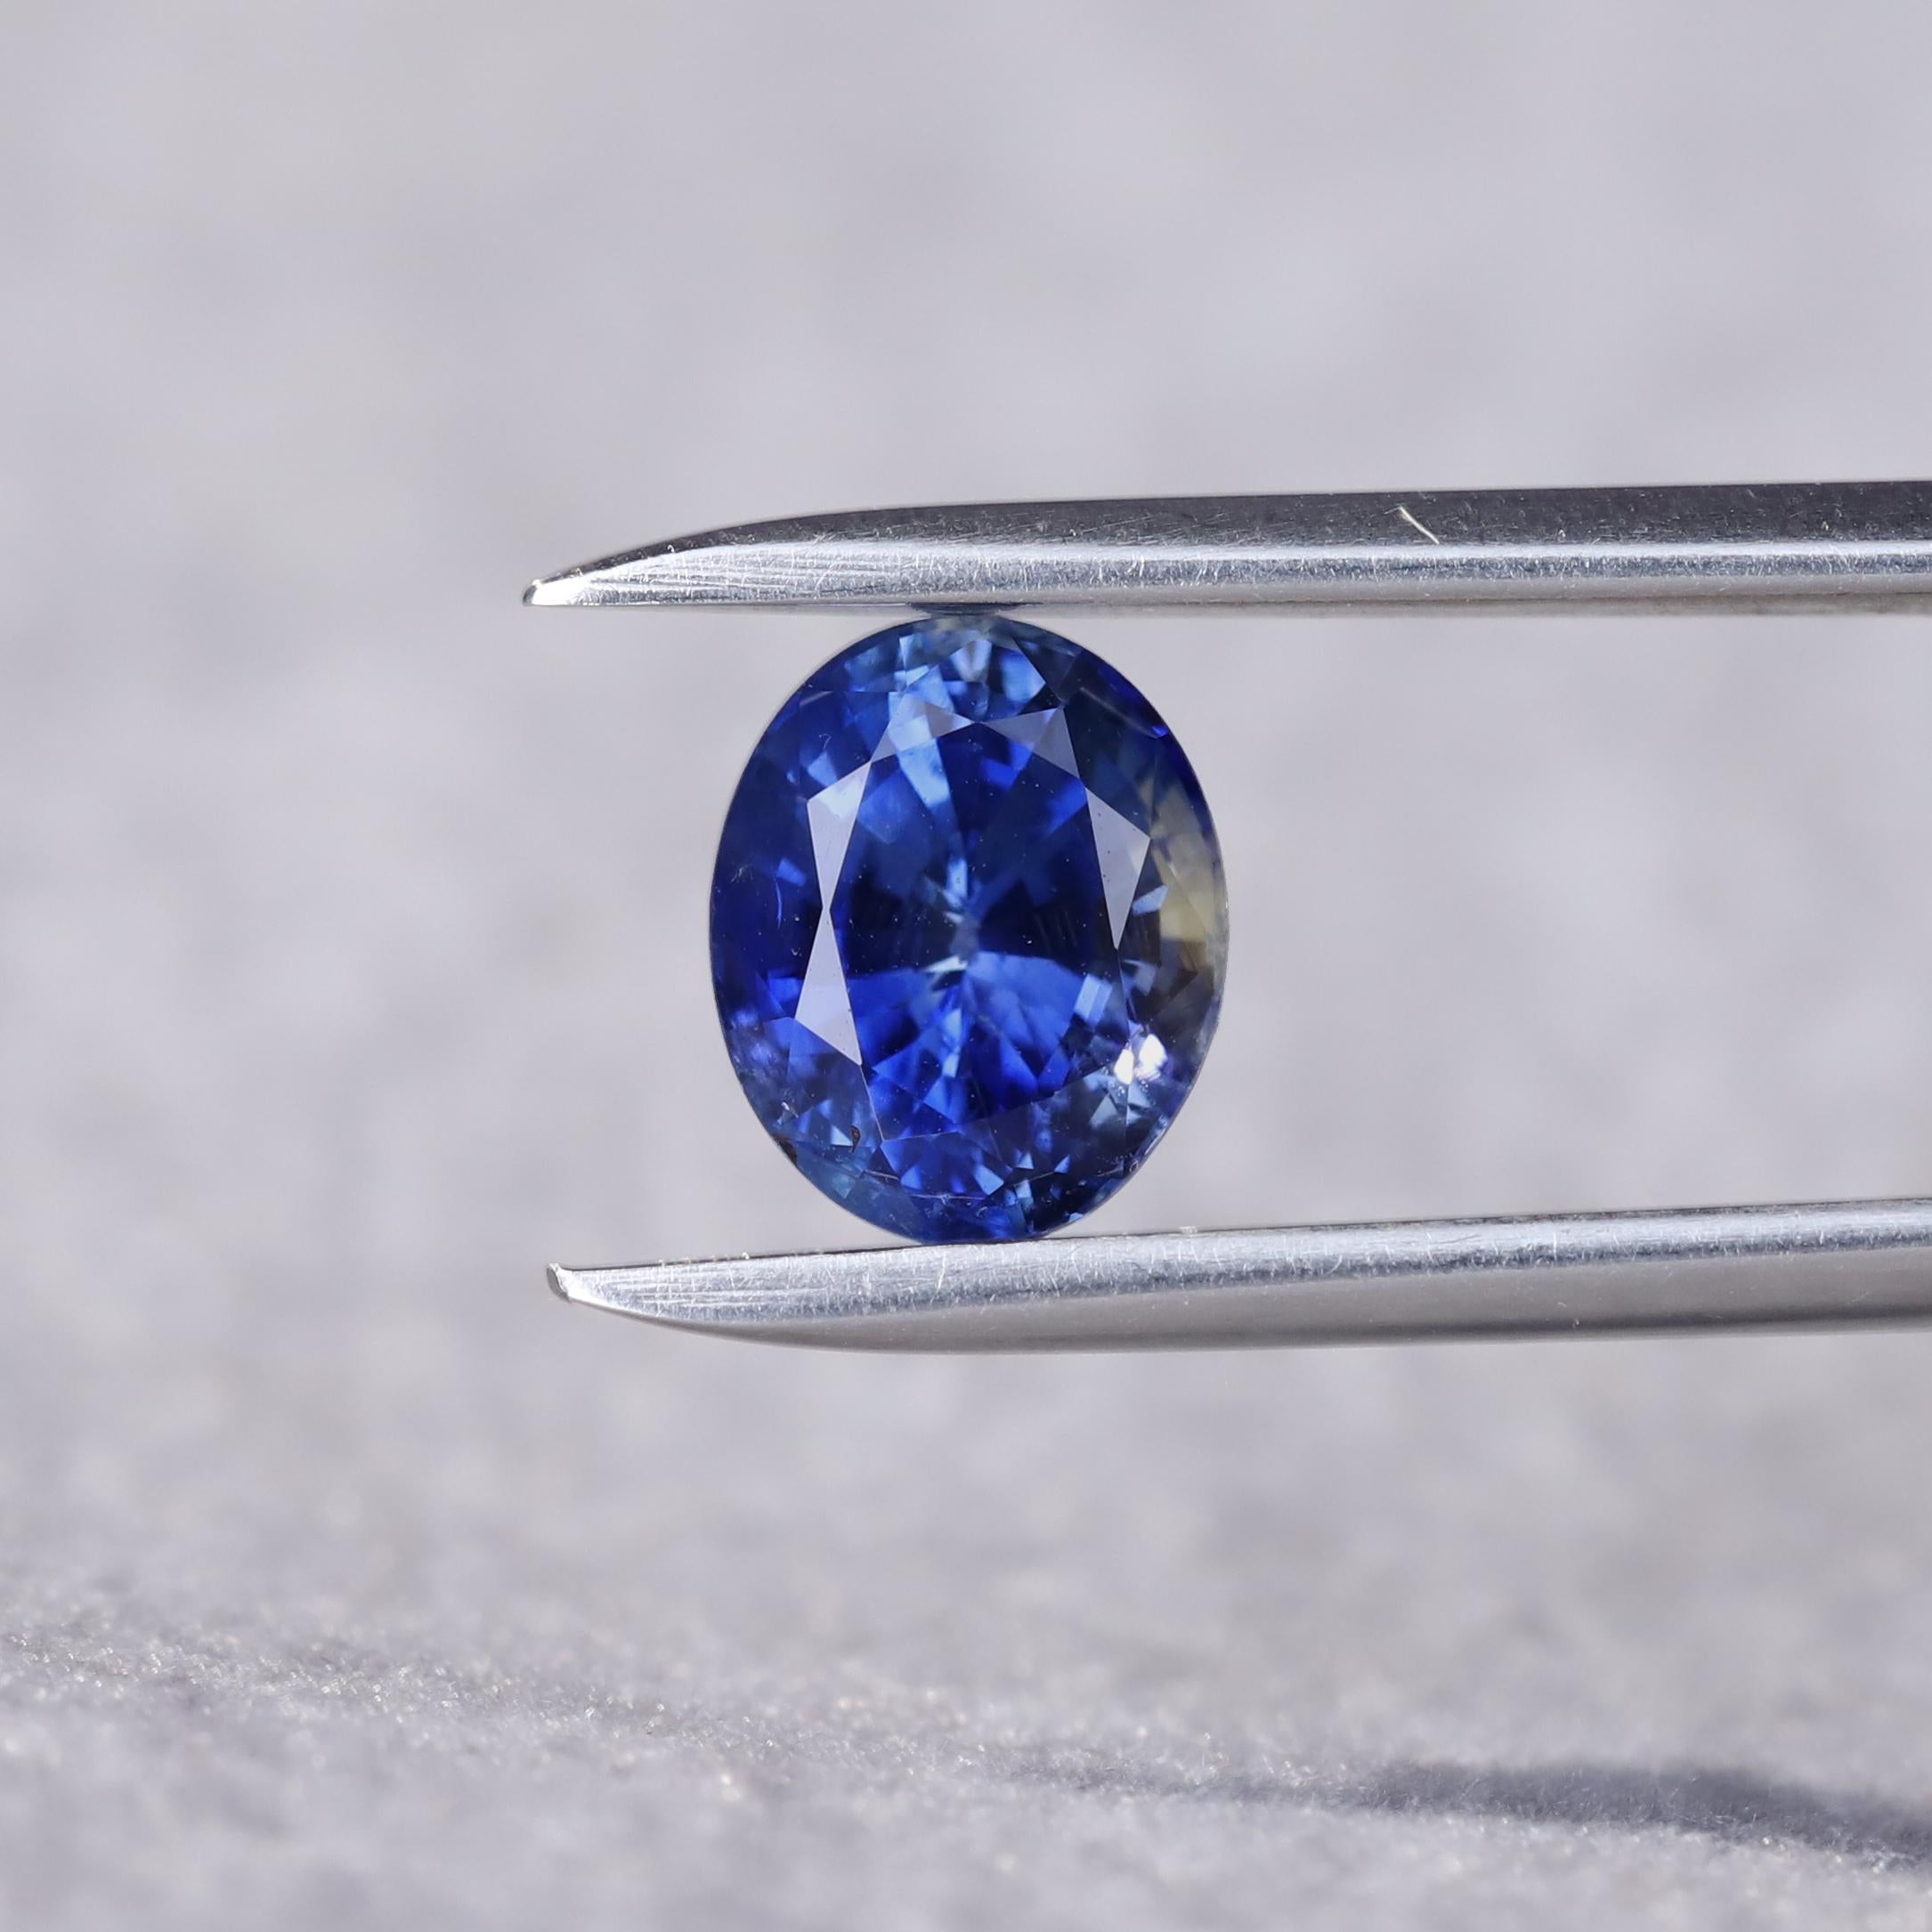 2.16 Carat Oval Cut Natural Blue Sapphire Loose Gemstone from Sri Lanka (Saphir bleu naturel taillé en ovale) Pour femmes en vente